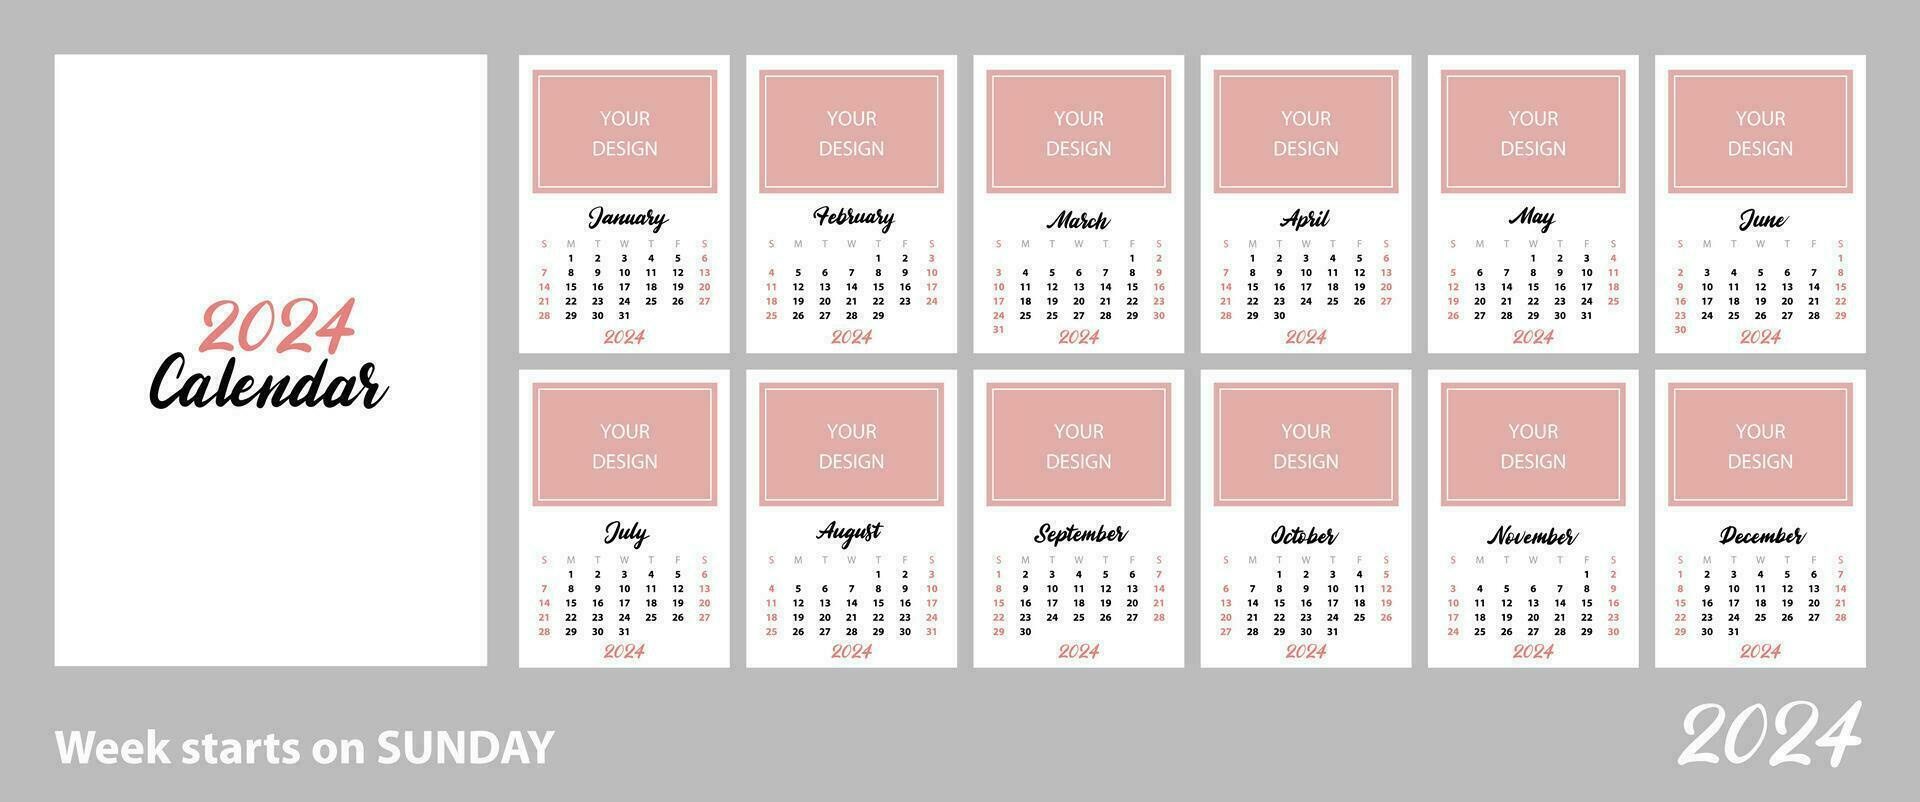 Calendar Template For 2024. Vertical Layout For Your Design. Size | Printable Calendar 2024 A3